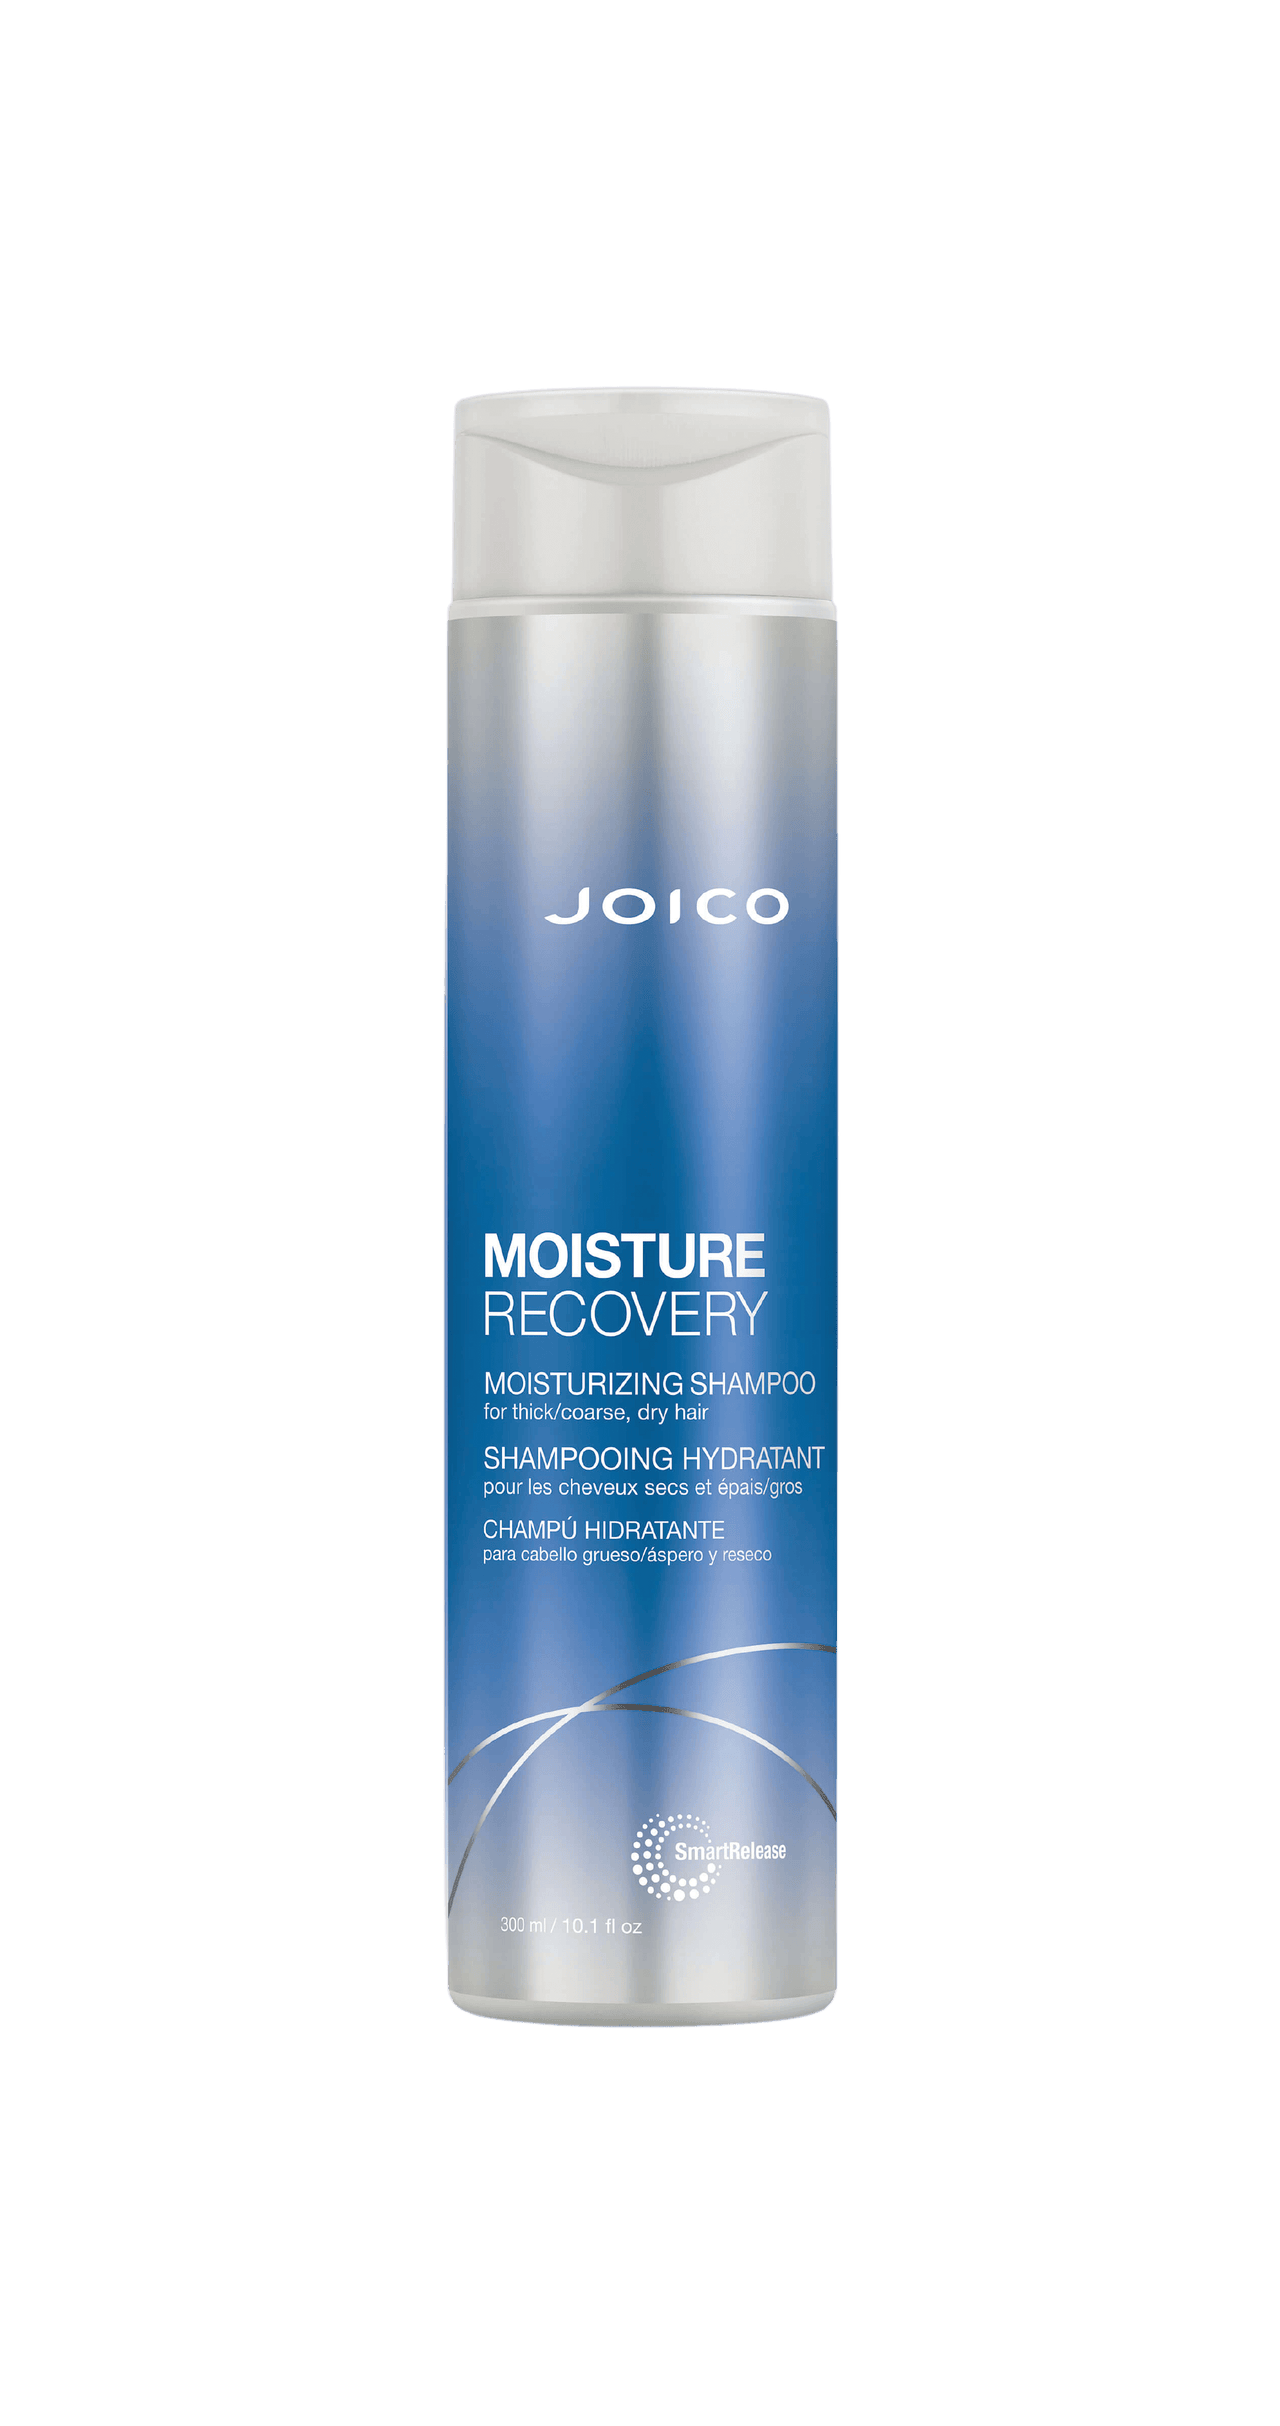 Joico Moisture Recovery Shampoo 300mL Bottle